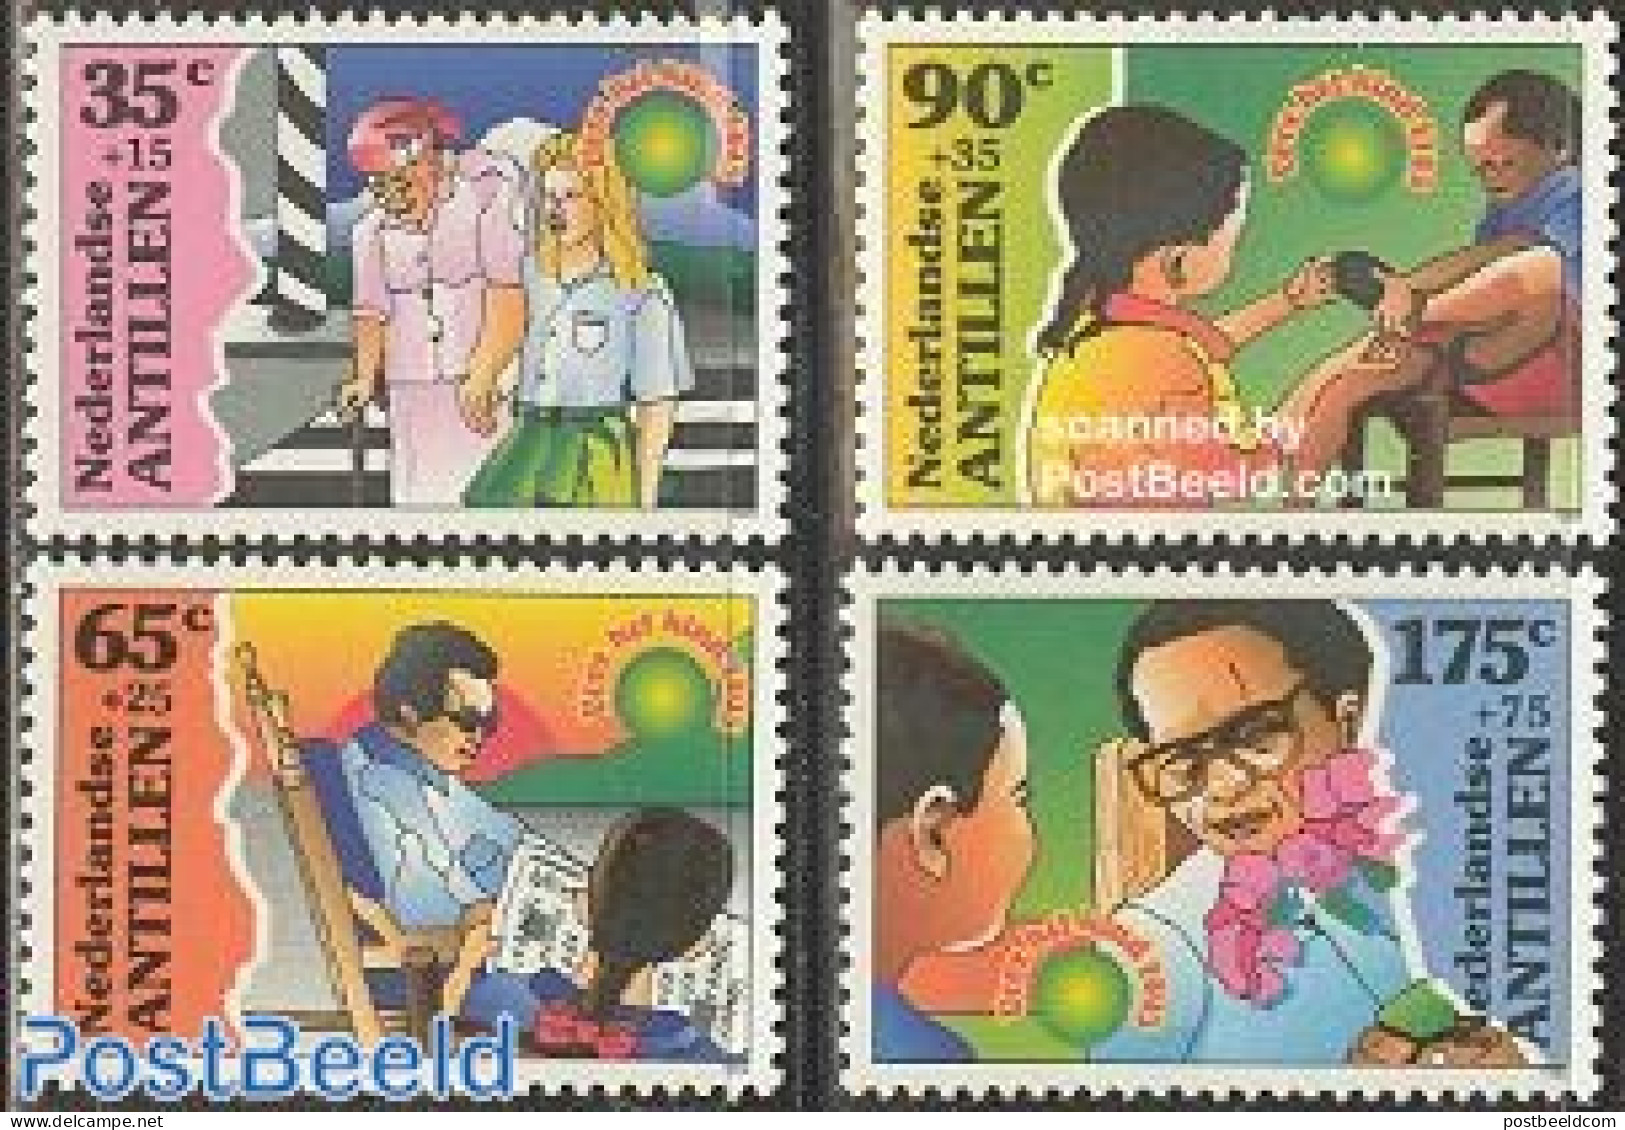 Netherlands Antilles 1995 Child Welfare 4v, Mint NH, Transport - Traffic Safety - Accidentes Y Seguridad Vial